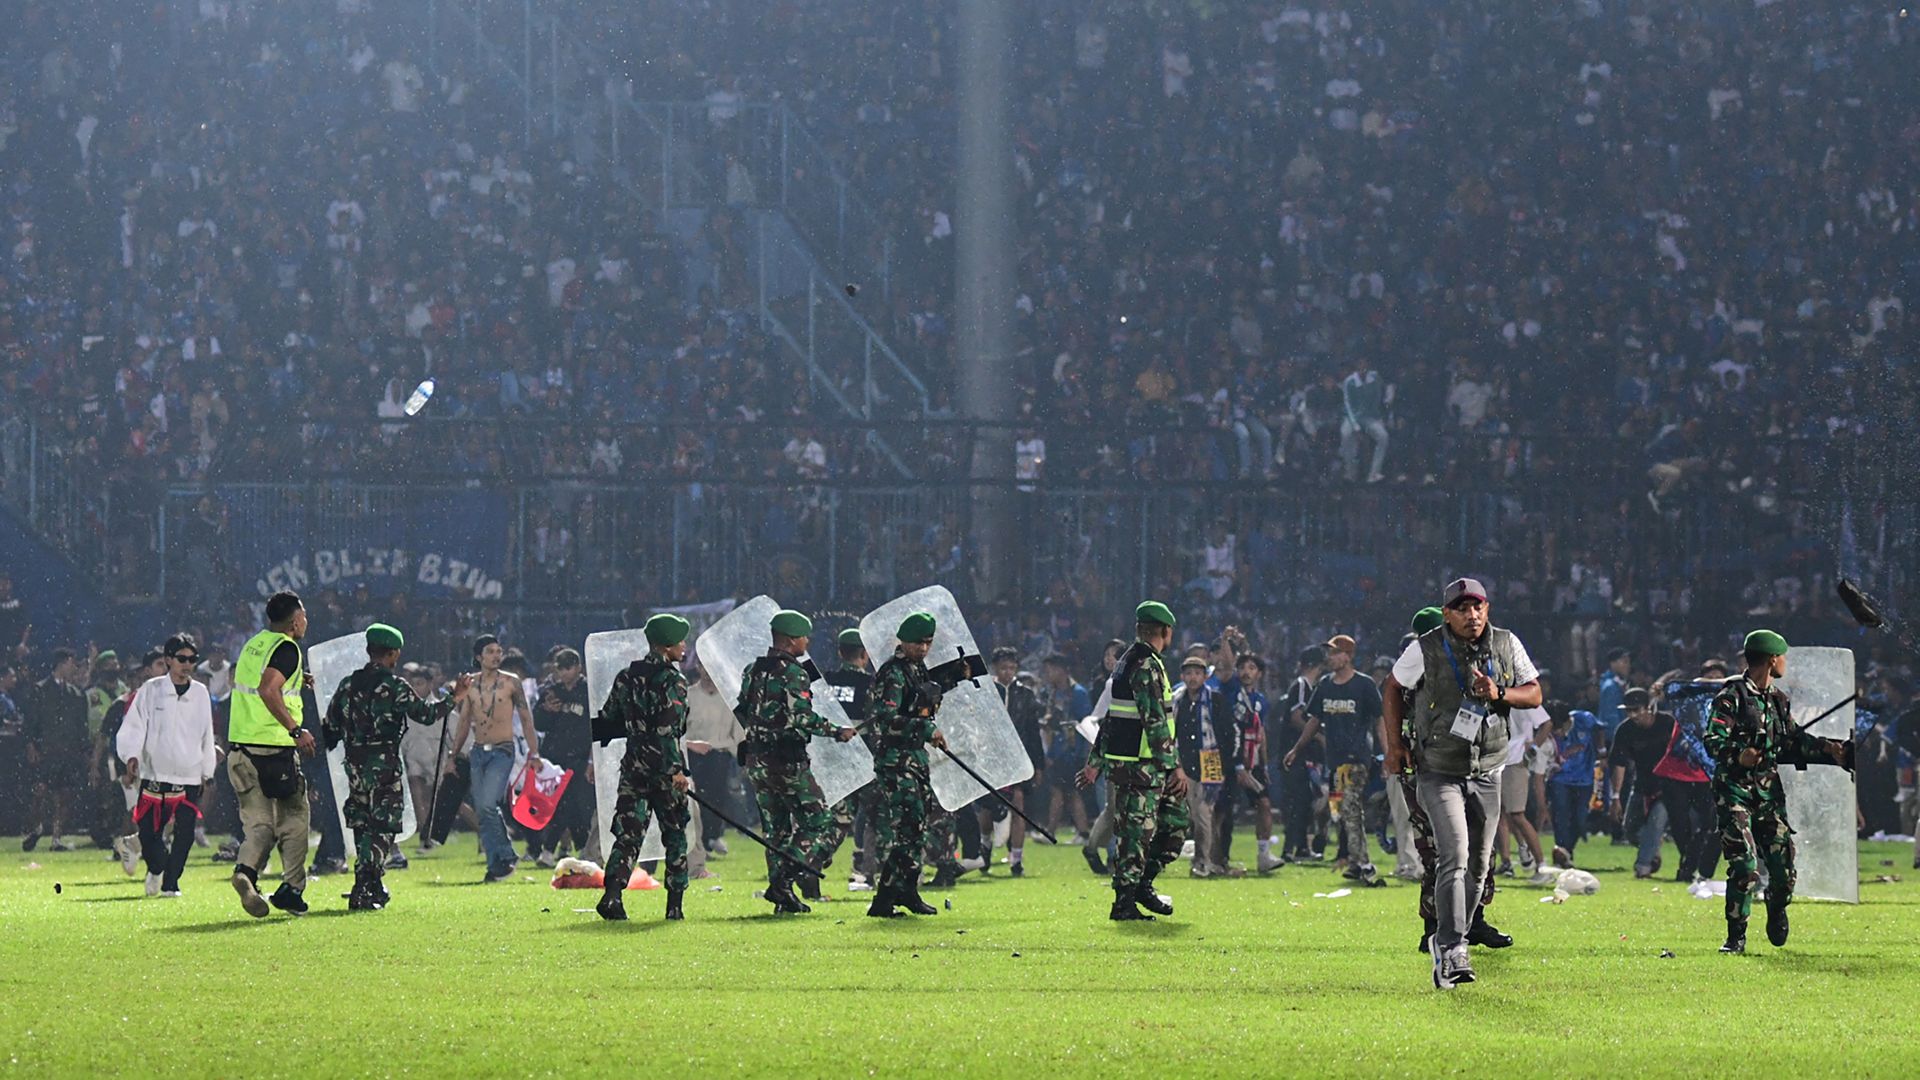 Members of the Indonesian army securing the pitch after a football match between Arema FC and Persebaya Surabaya at Kanjuruhan stadium in Malang, East Java. 